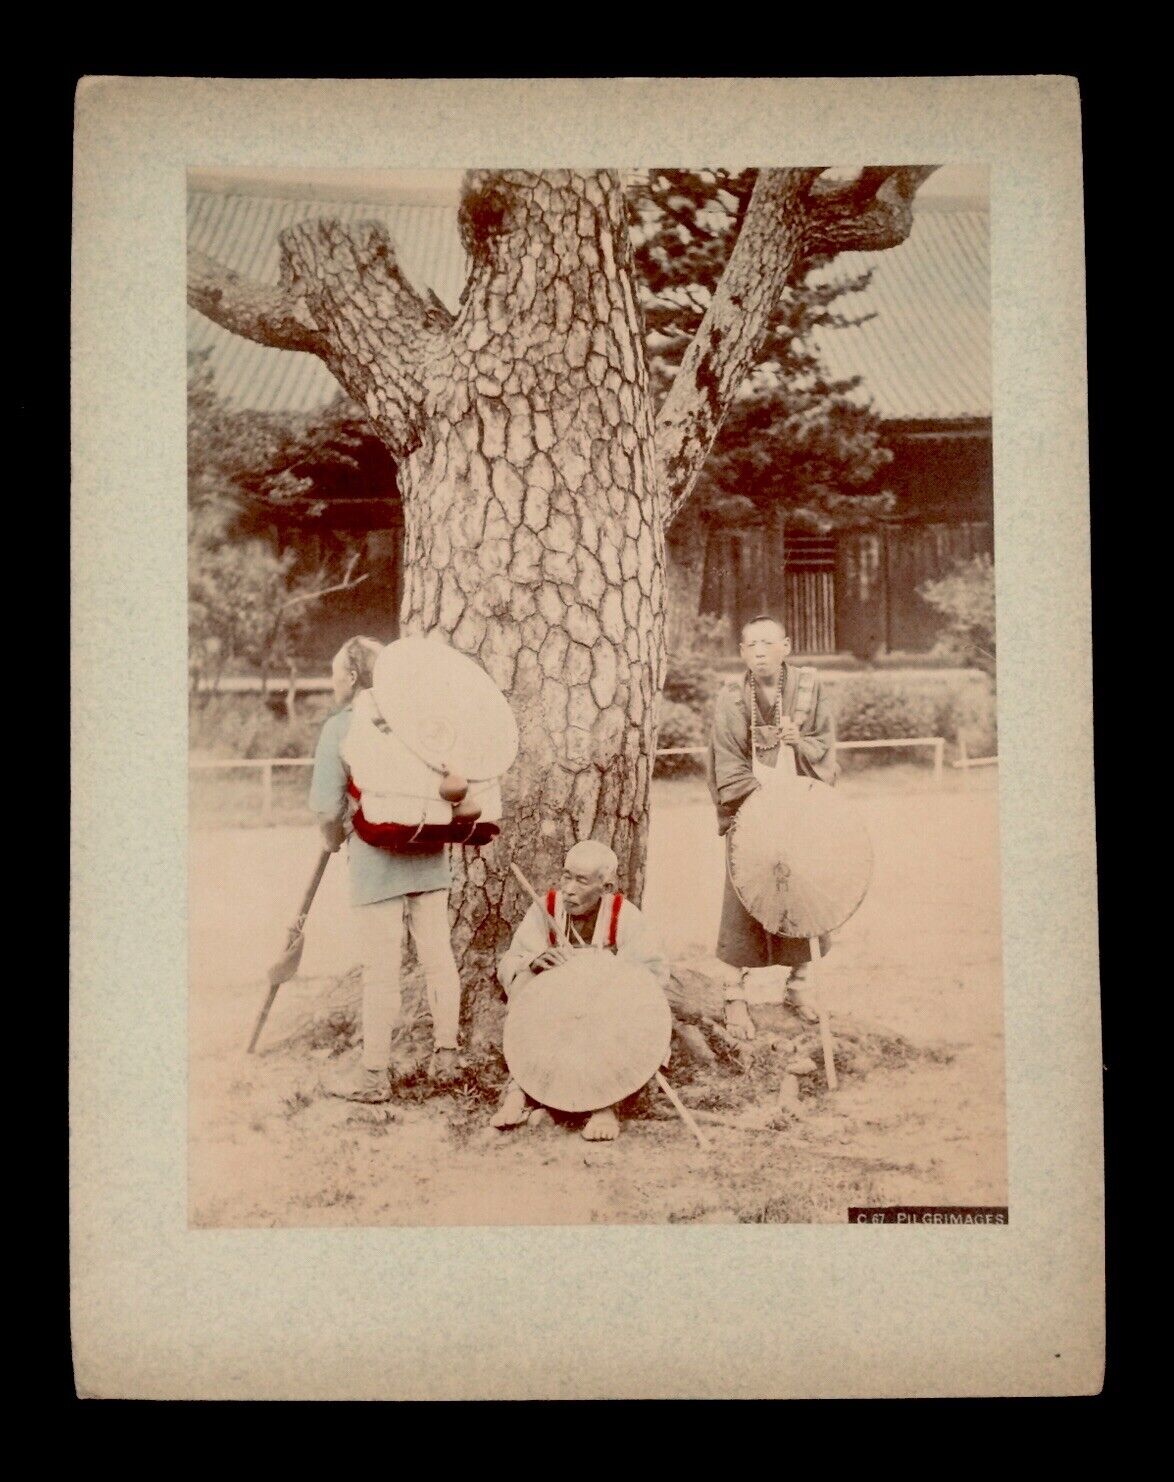 ORIGINAL OLD VINTAGE PHOTO. PILGRIMAGES. 26 x 19.5 cm. CIRCA 1890 [JAPAN]